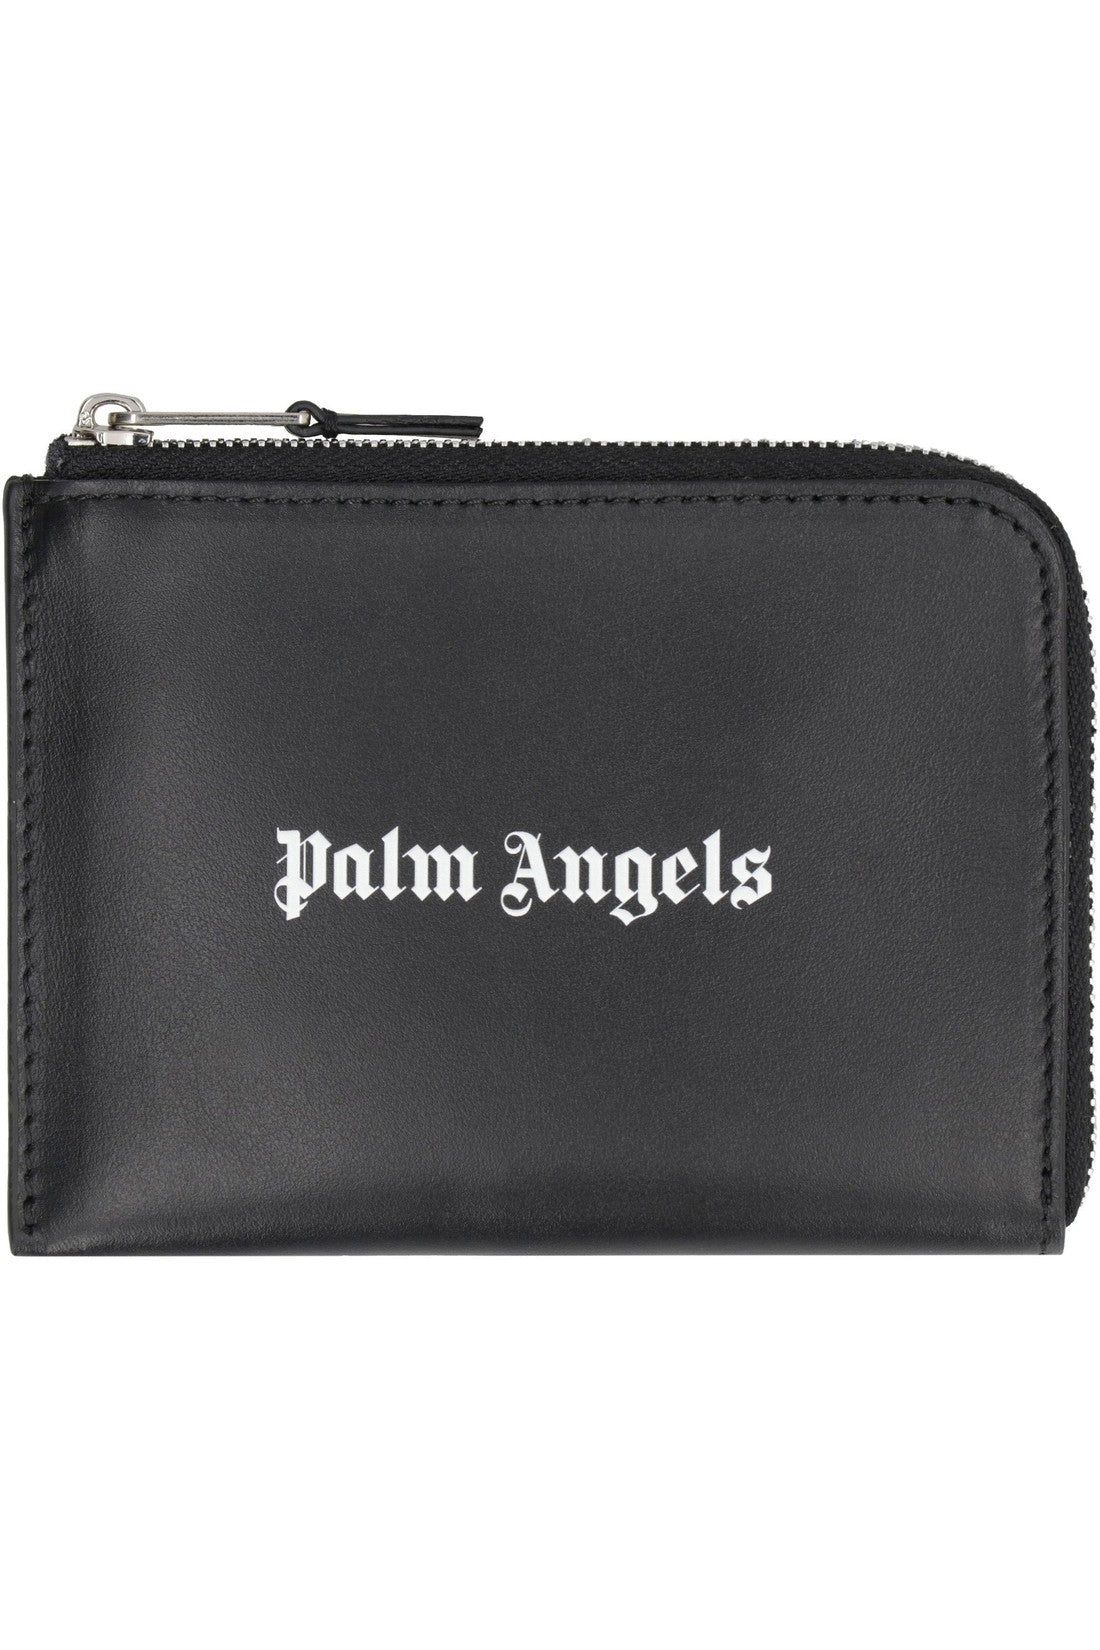 Palm Angels-OUTLET-SALE-Leather card holder-ARCHIVIST